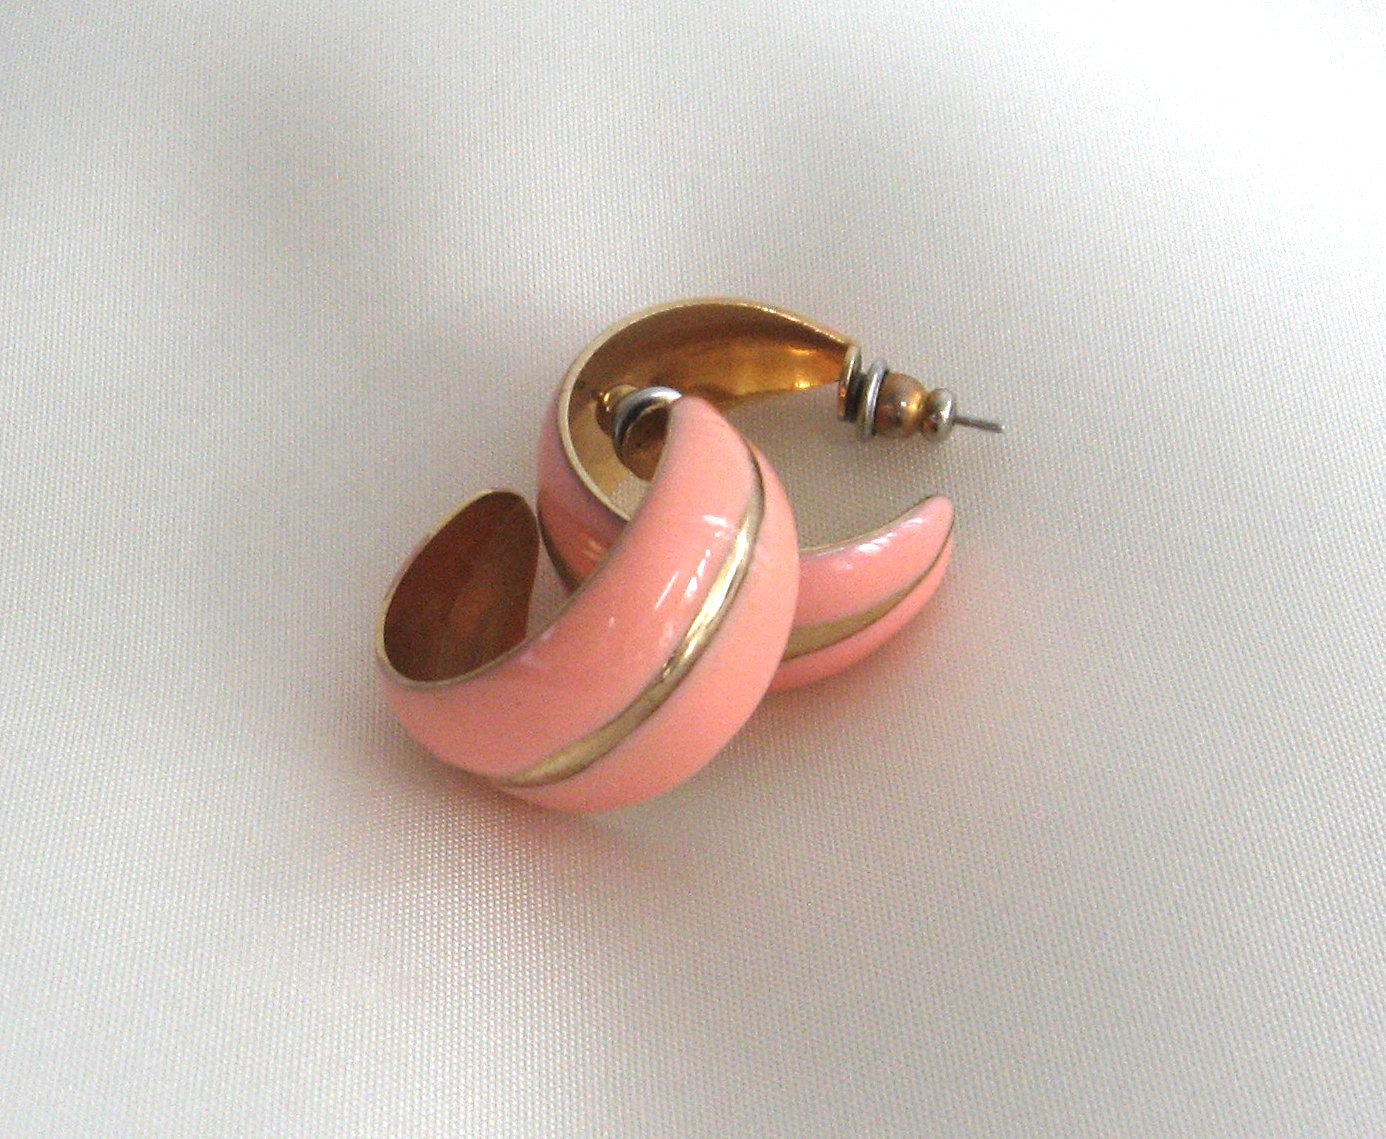 Pink And Gold Wide Hoop Earrings Vintage Jewelry 1970s